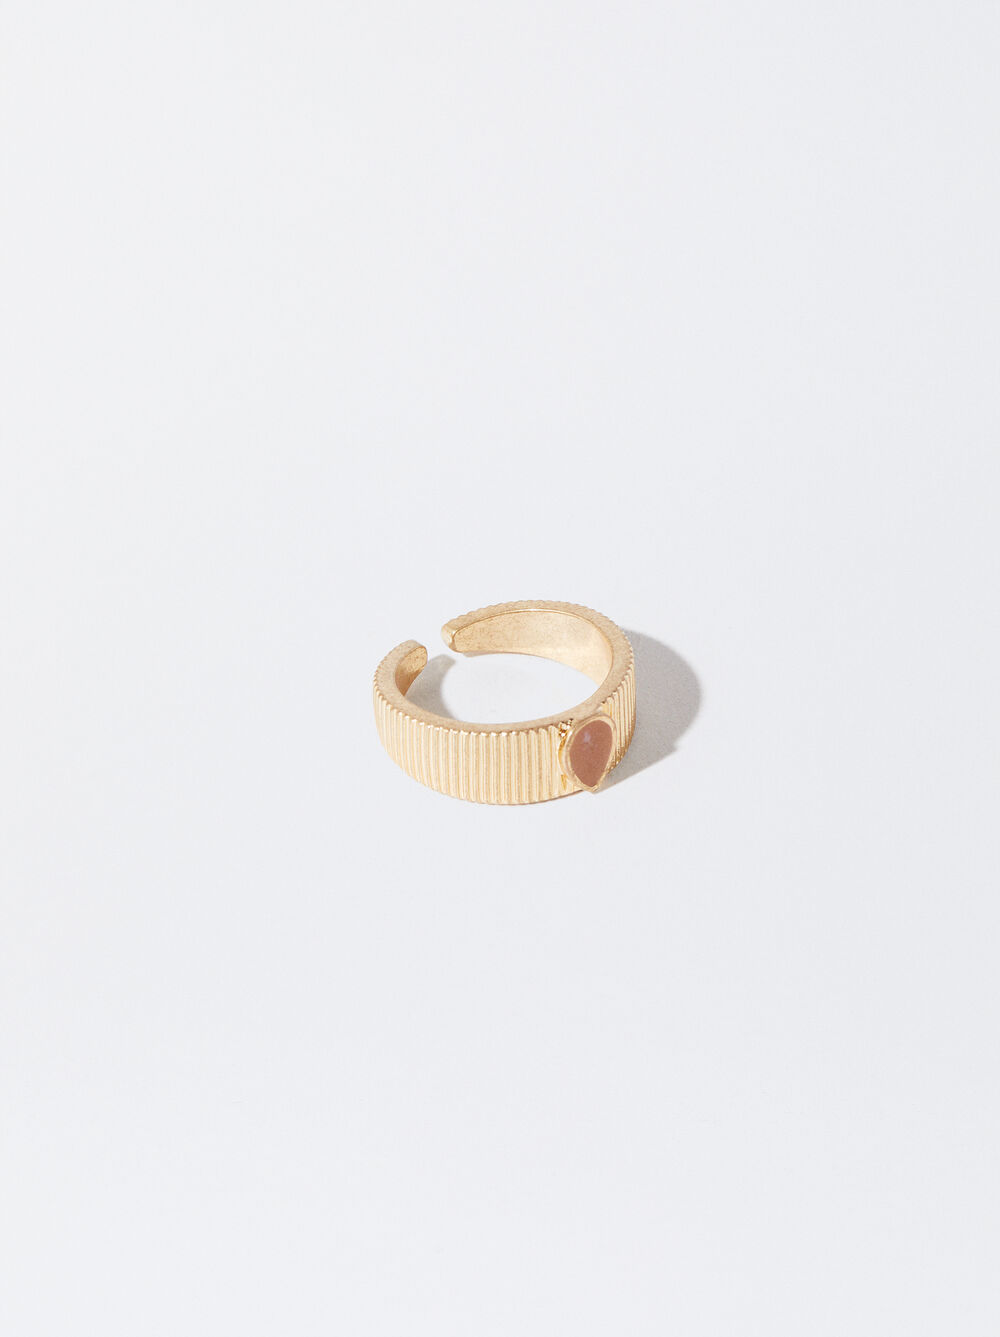 Goldener Ring Mit Emaille